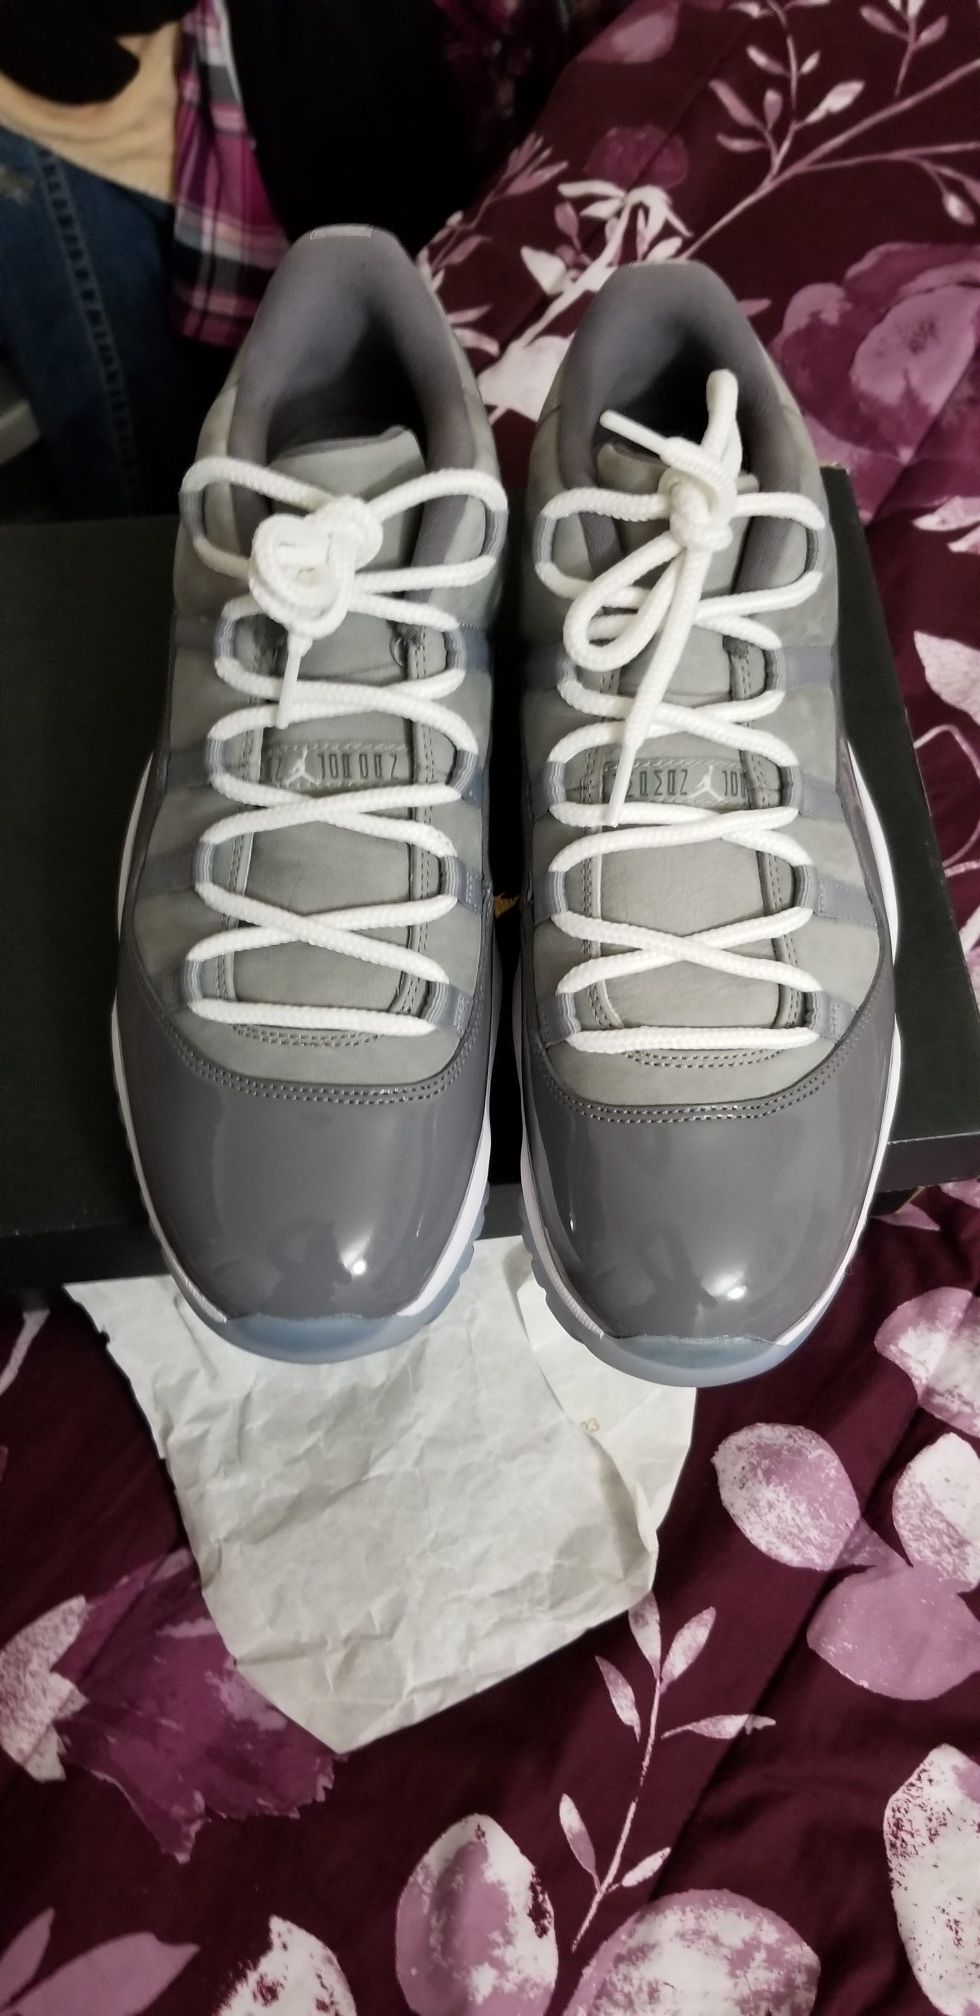 Jordan 11 cool grey size 13 brand new